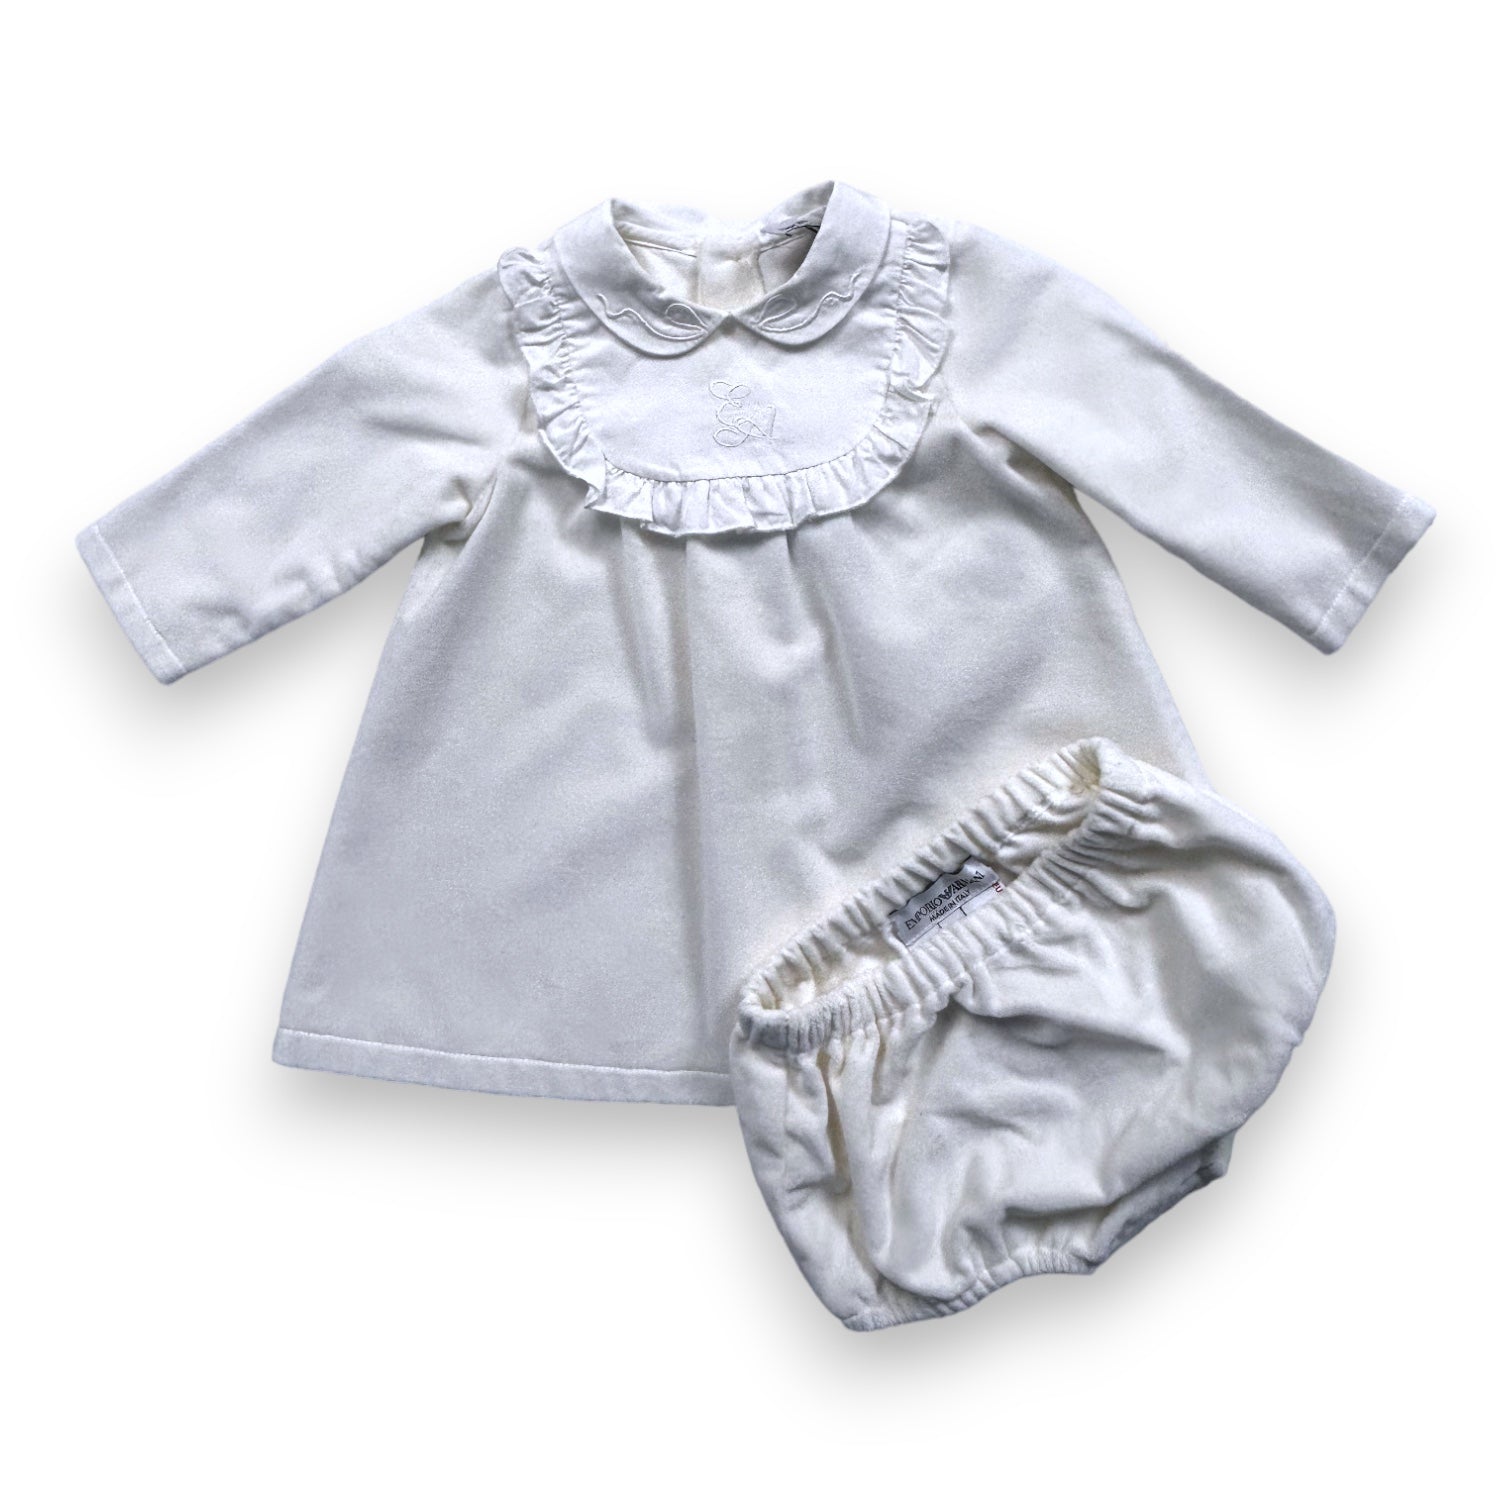 ARMANI - White dress and bloomer set - 6 months